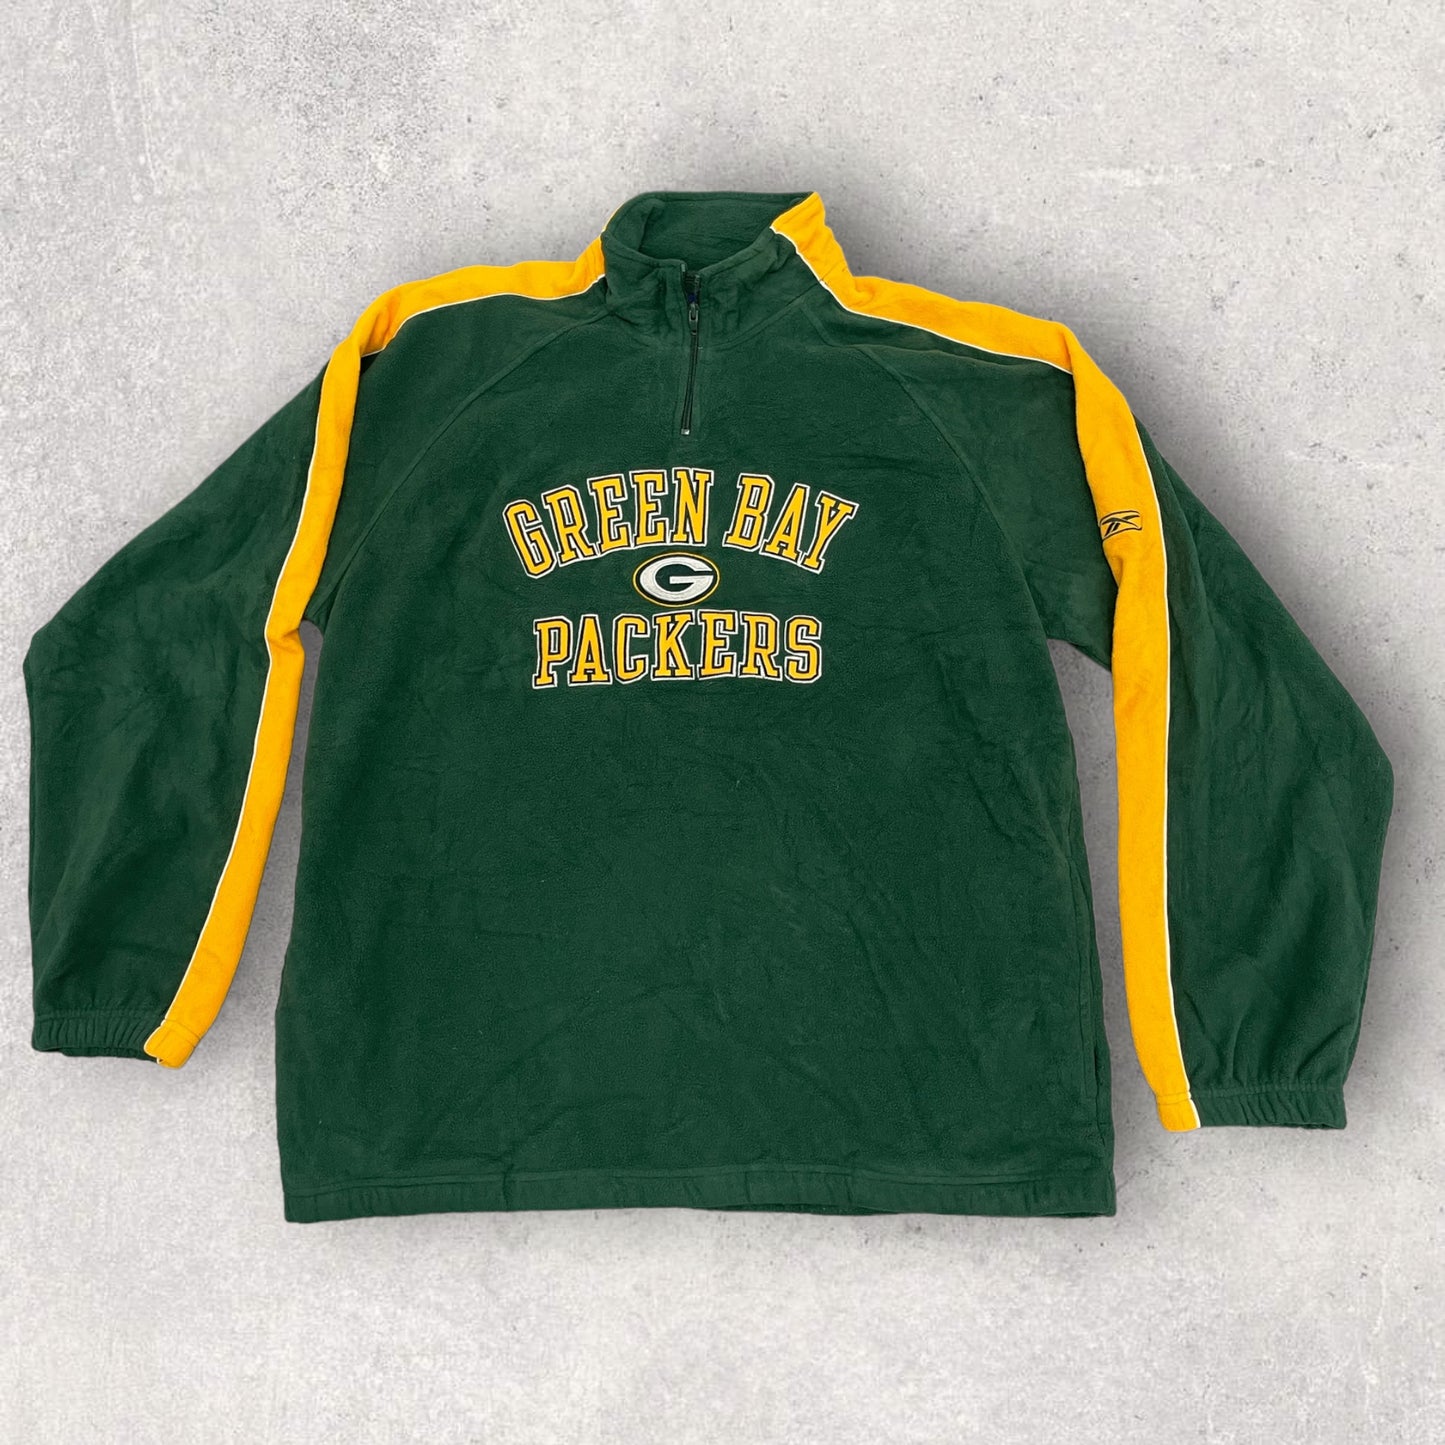 Vintage NFL Fleece Jacket Reebok Green Packers Size XL FL_12